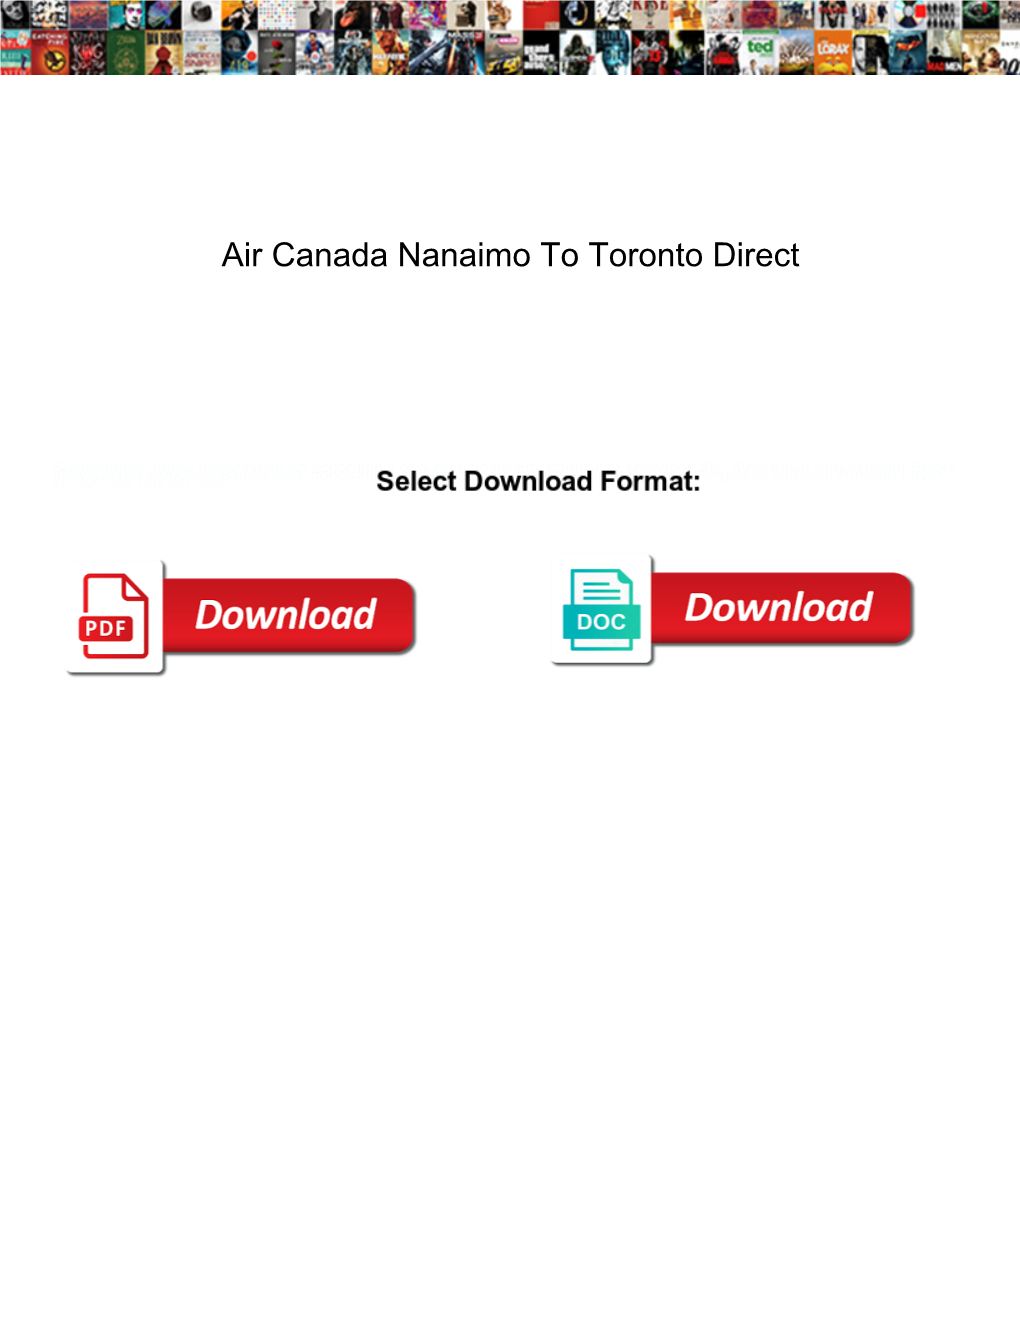 Air Canada Nanaimo to Toronto Direct